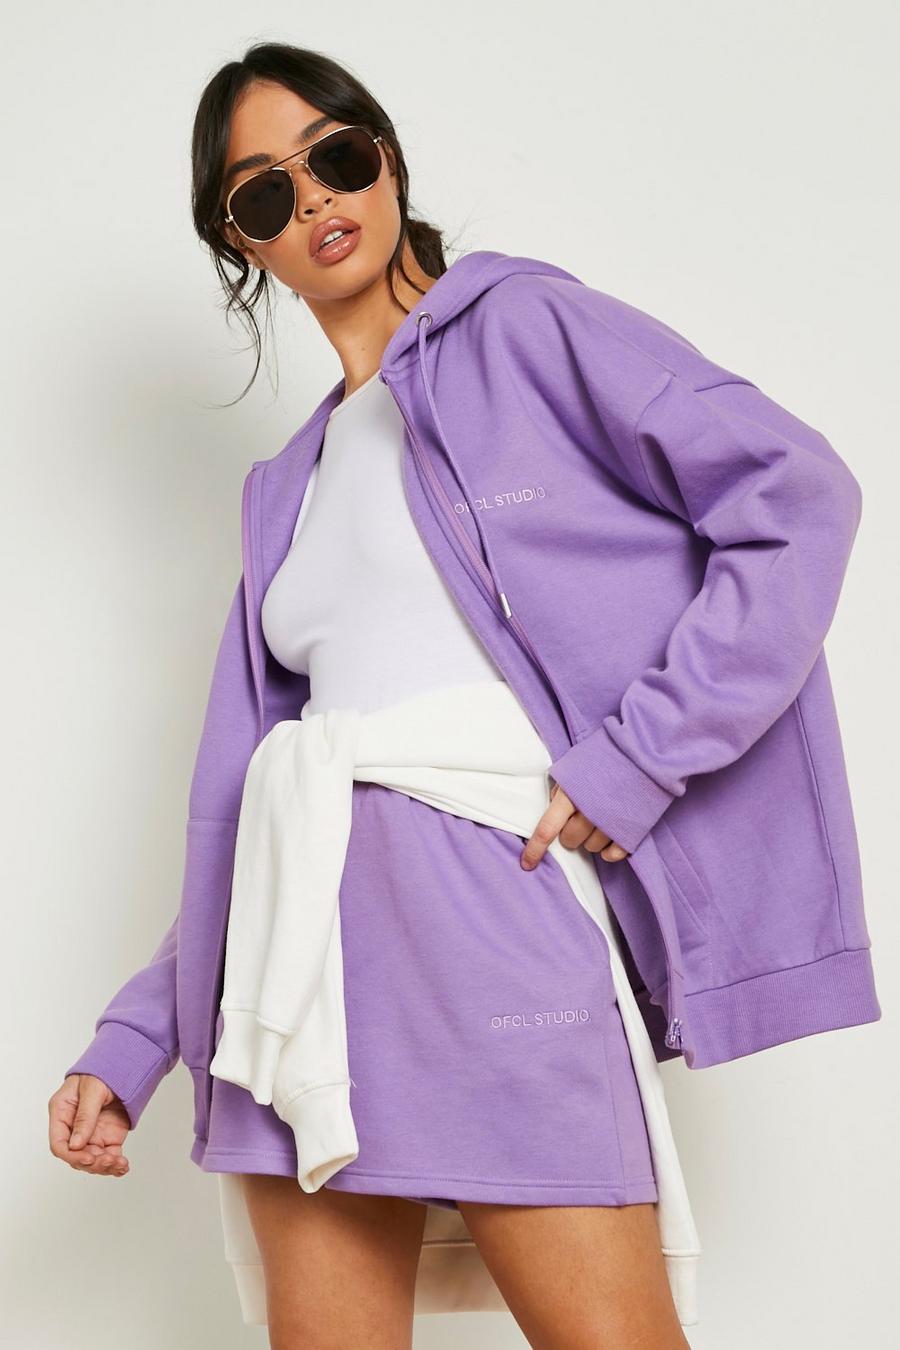 Pantalón corto deportivo con algodón ecológico, Purple